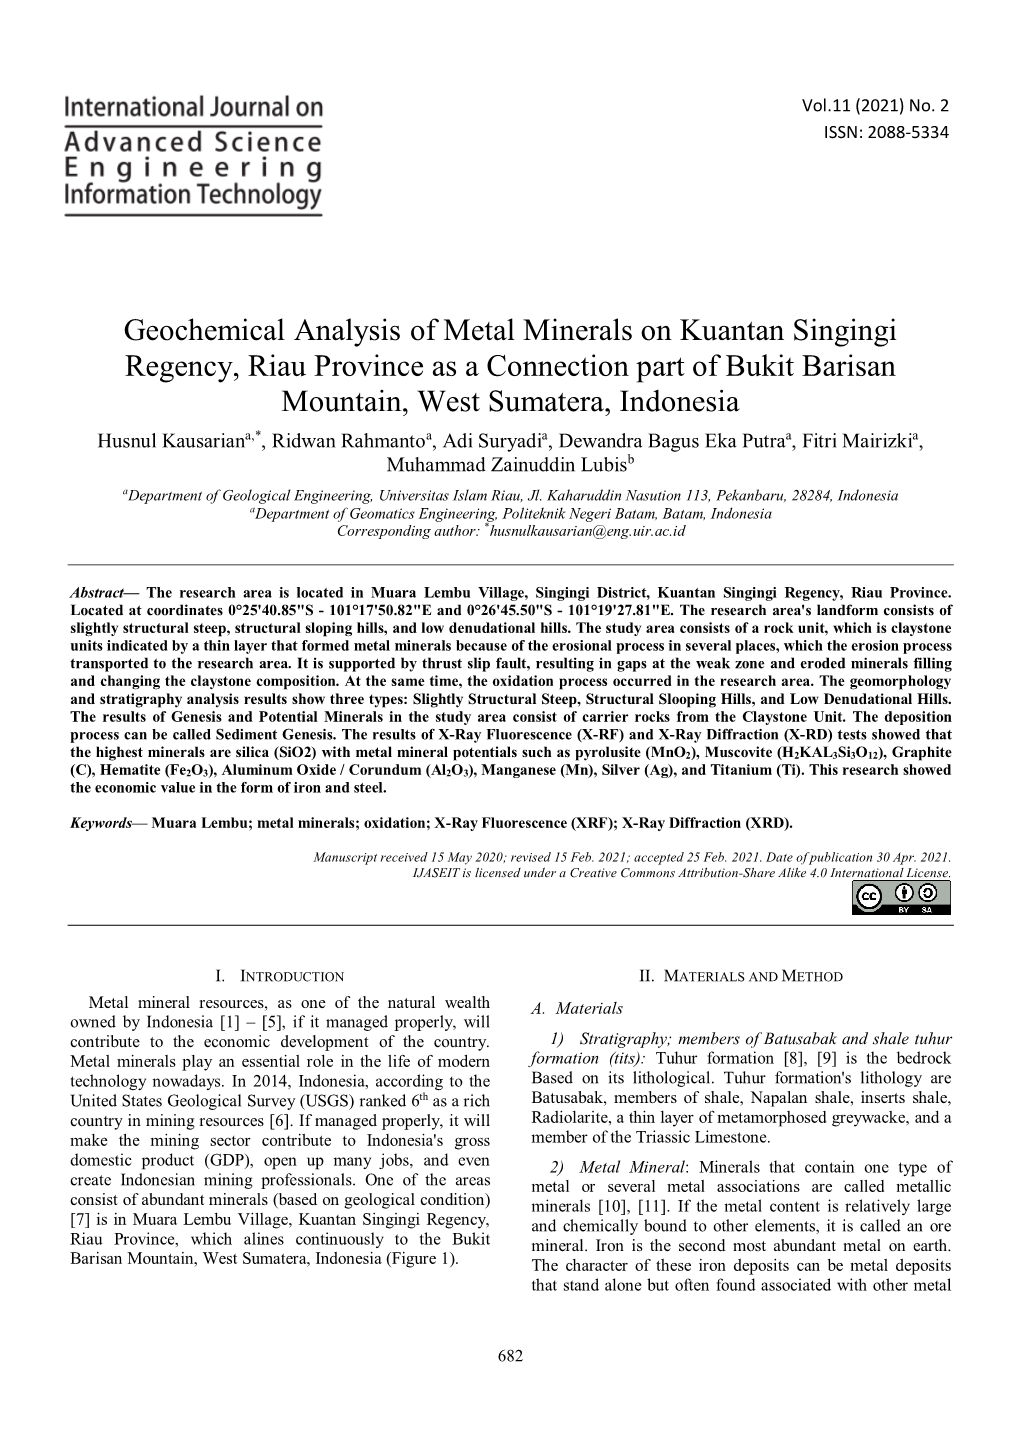 Geochemical Analysis of Metal Minerals on Kuantan Singingi